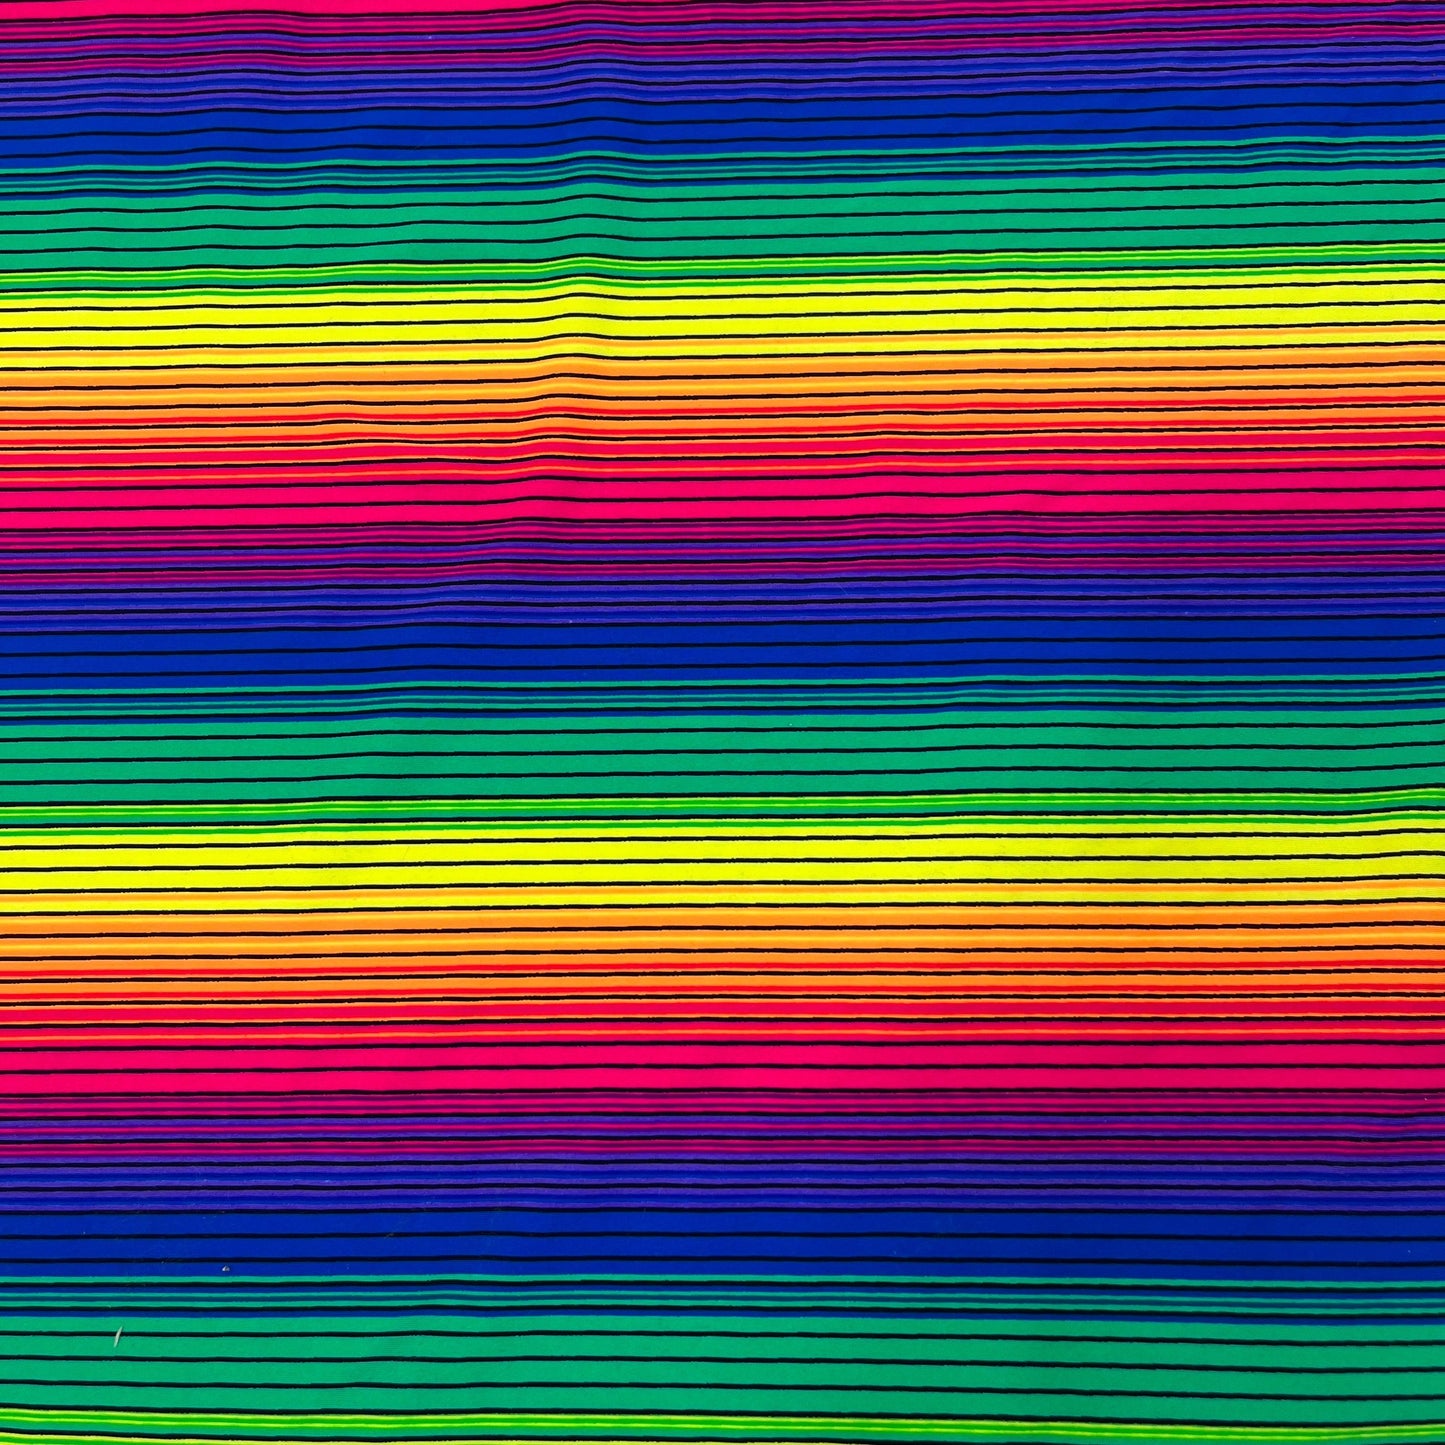 Rainbow on Athletic Jersey Fabric - Nature's Fabrics